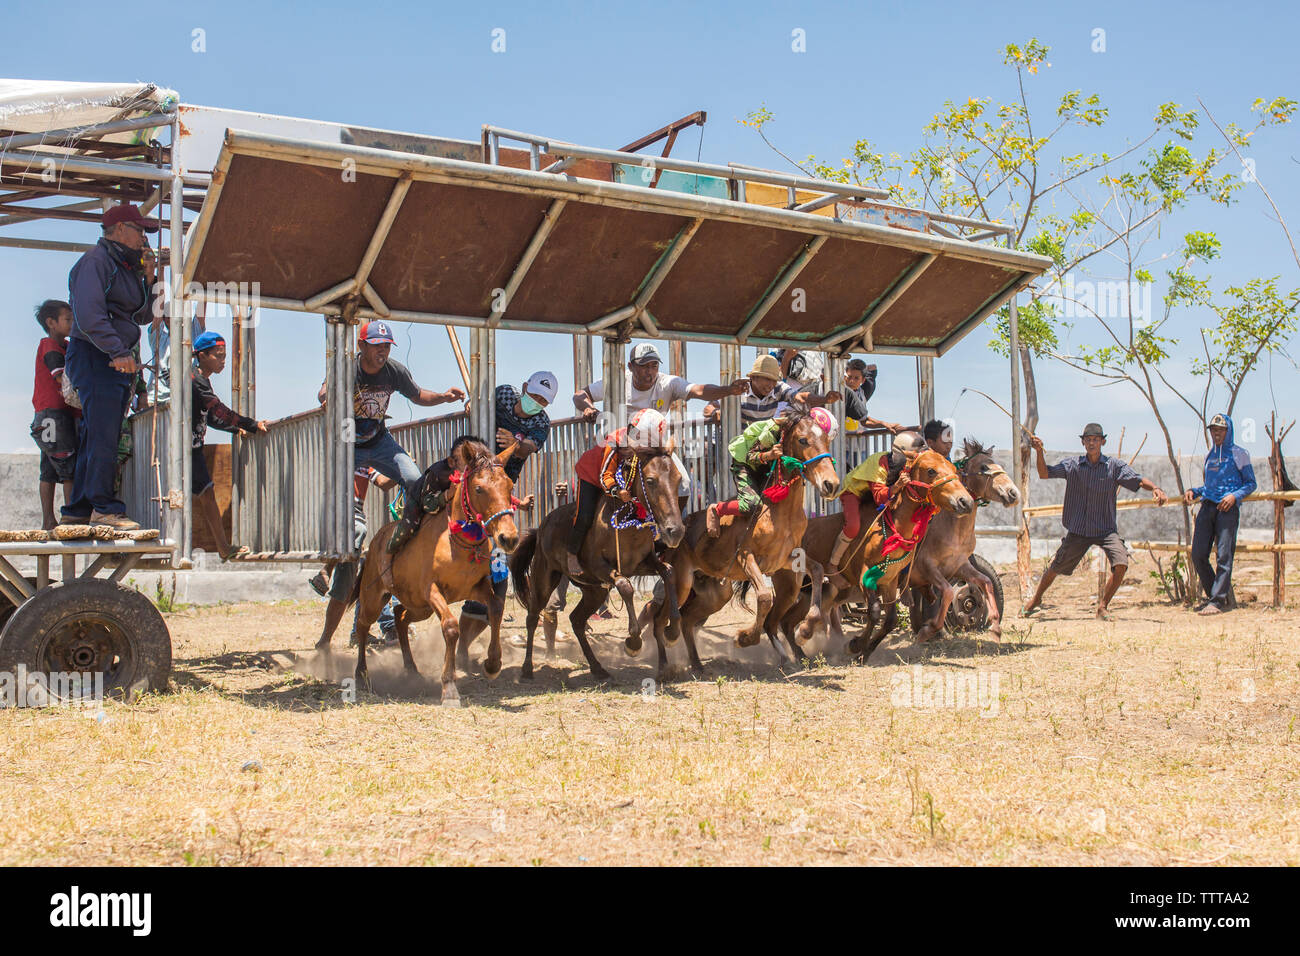 Jockeys sitting on racehorses at starting gate during horse racing Stock Photo